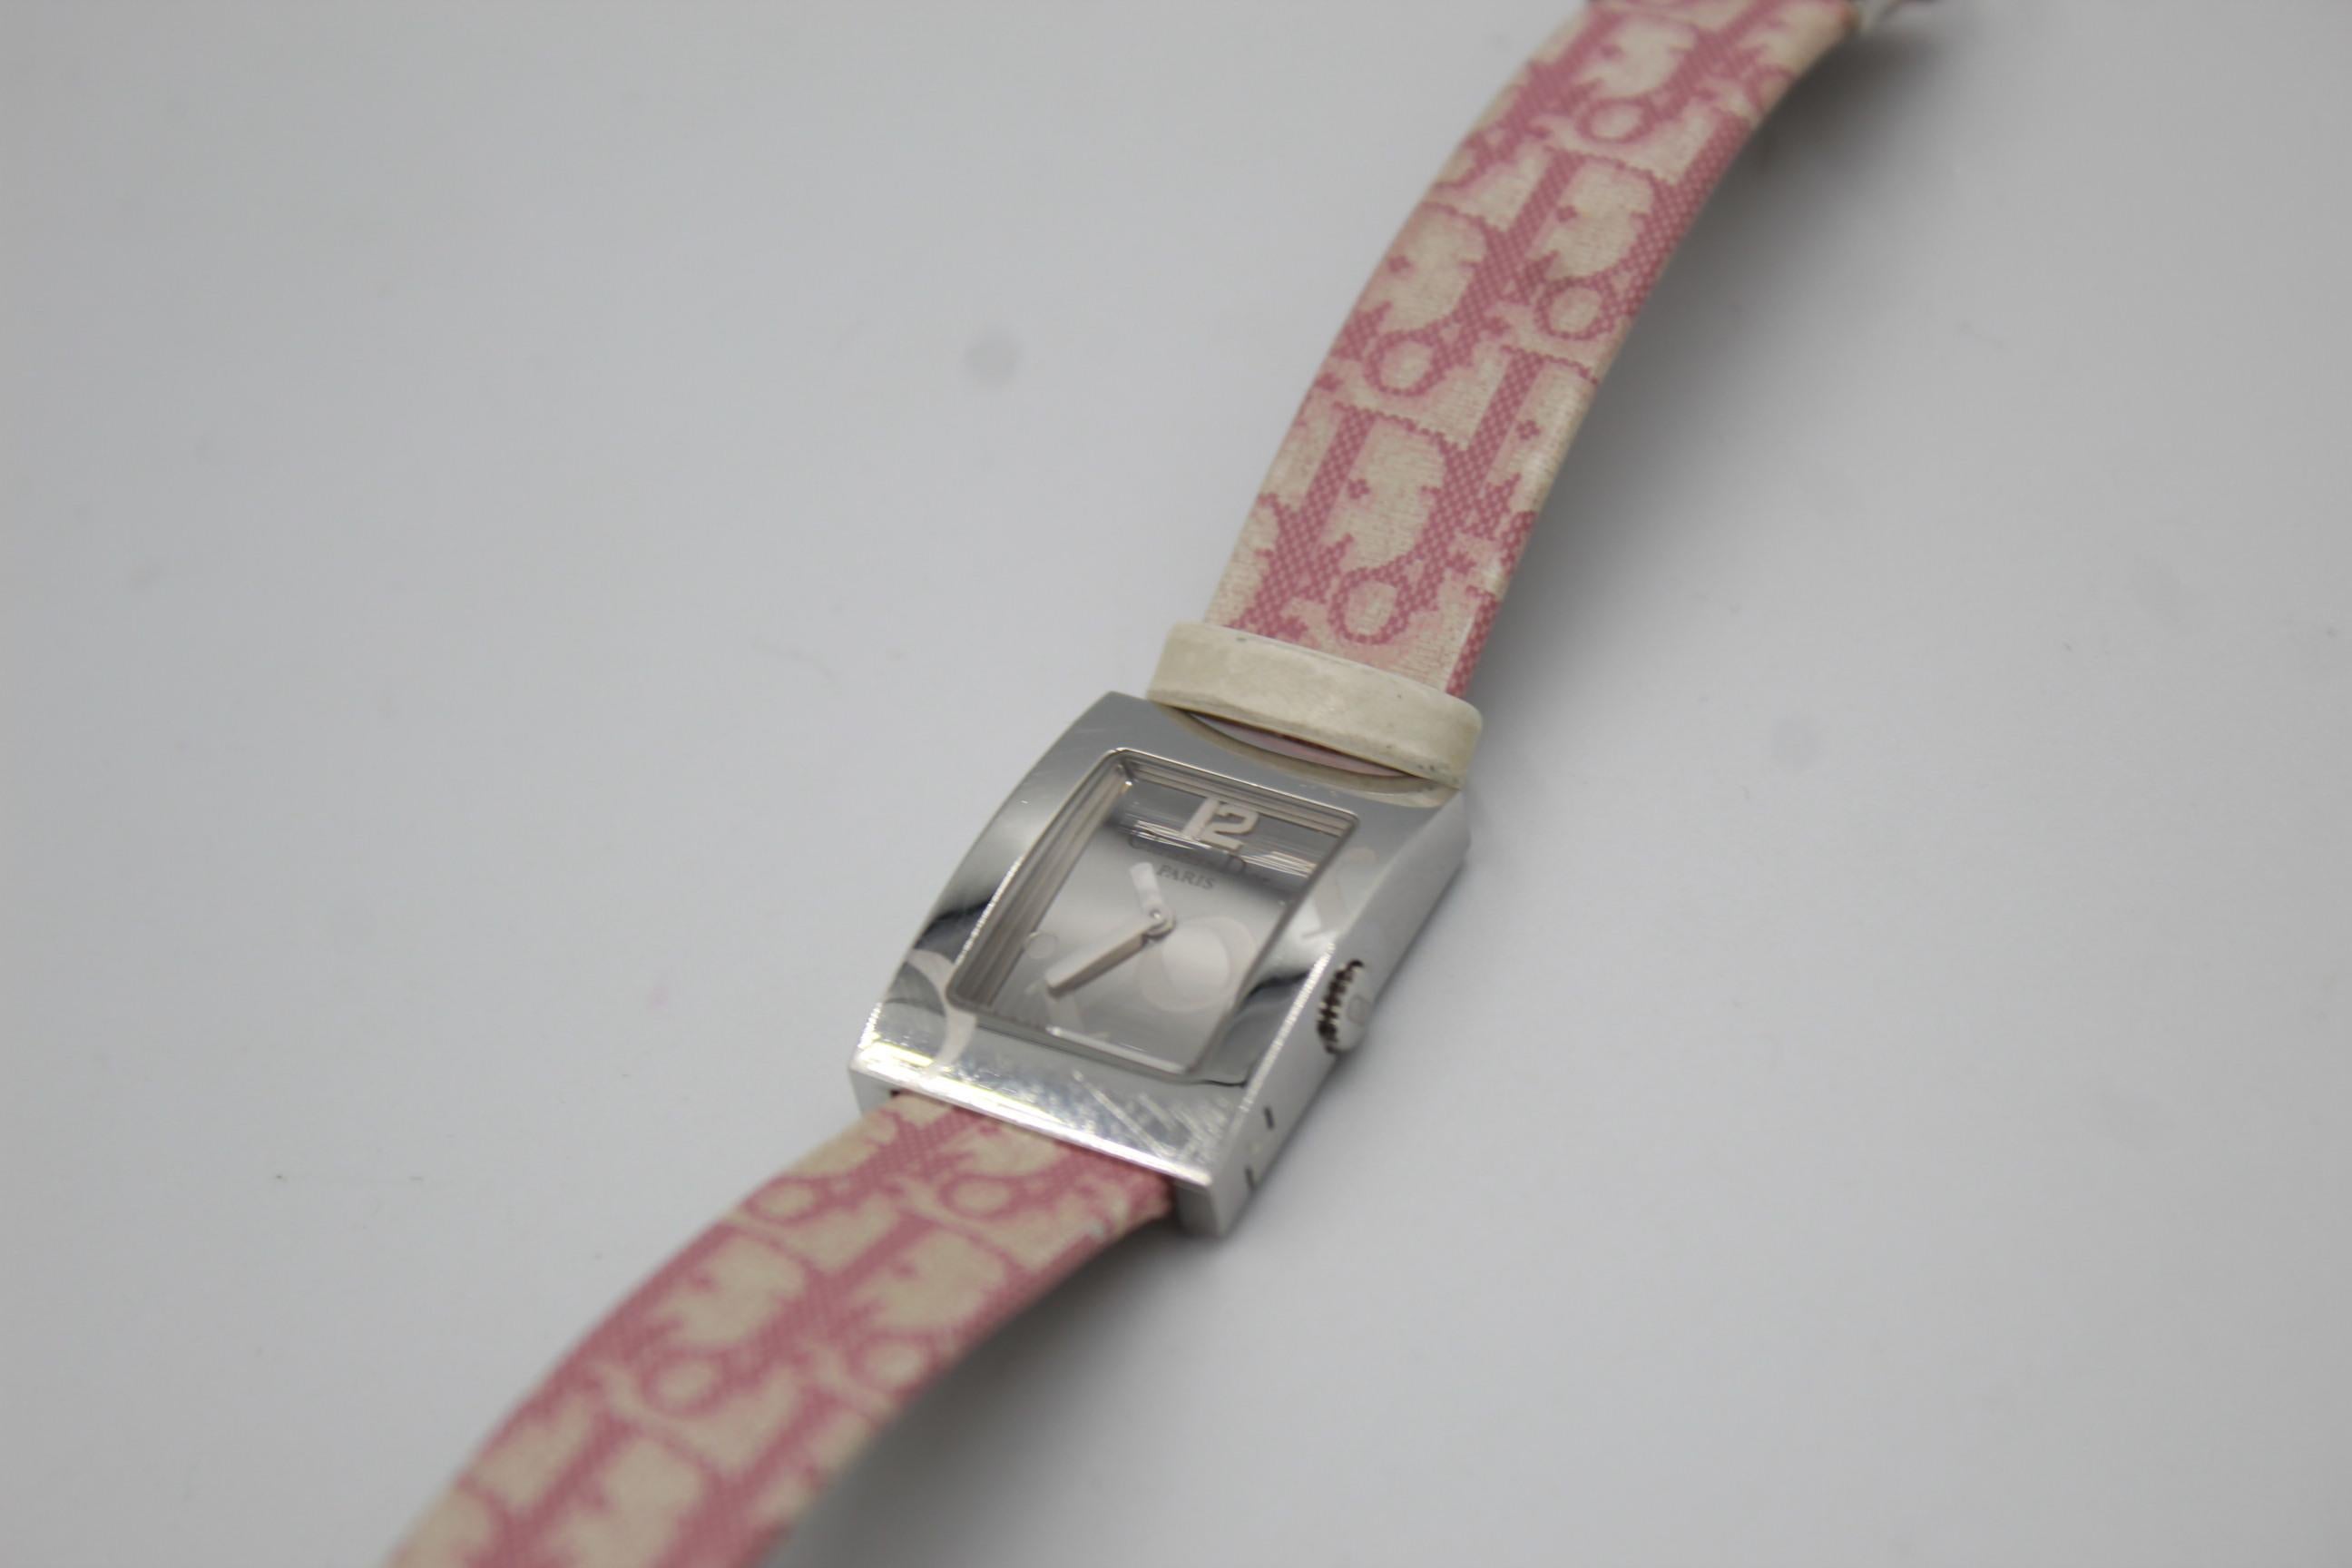 Dior logo watch in leather – pink monogram print.
Good conditions.
20cm x 1.2 cm.
2cm x 2.5cm
